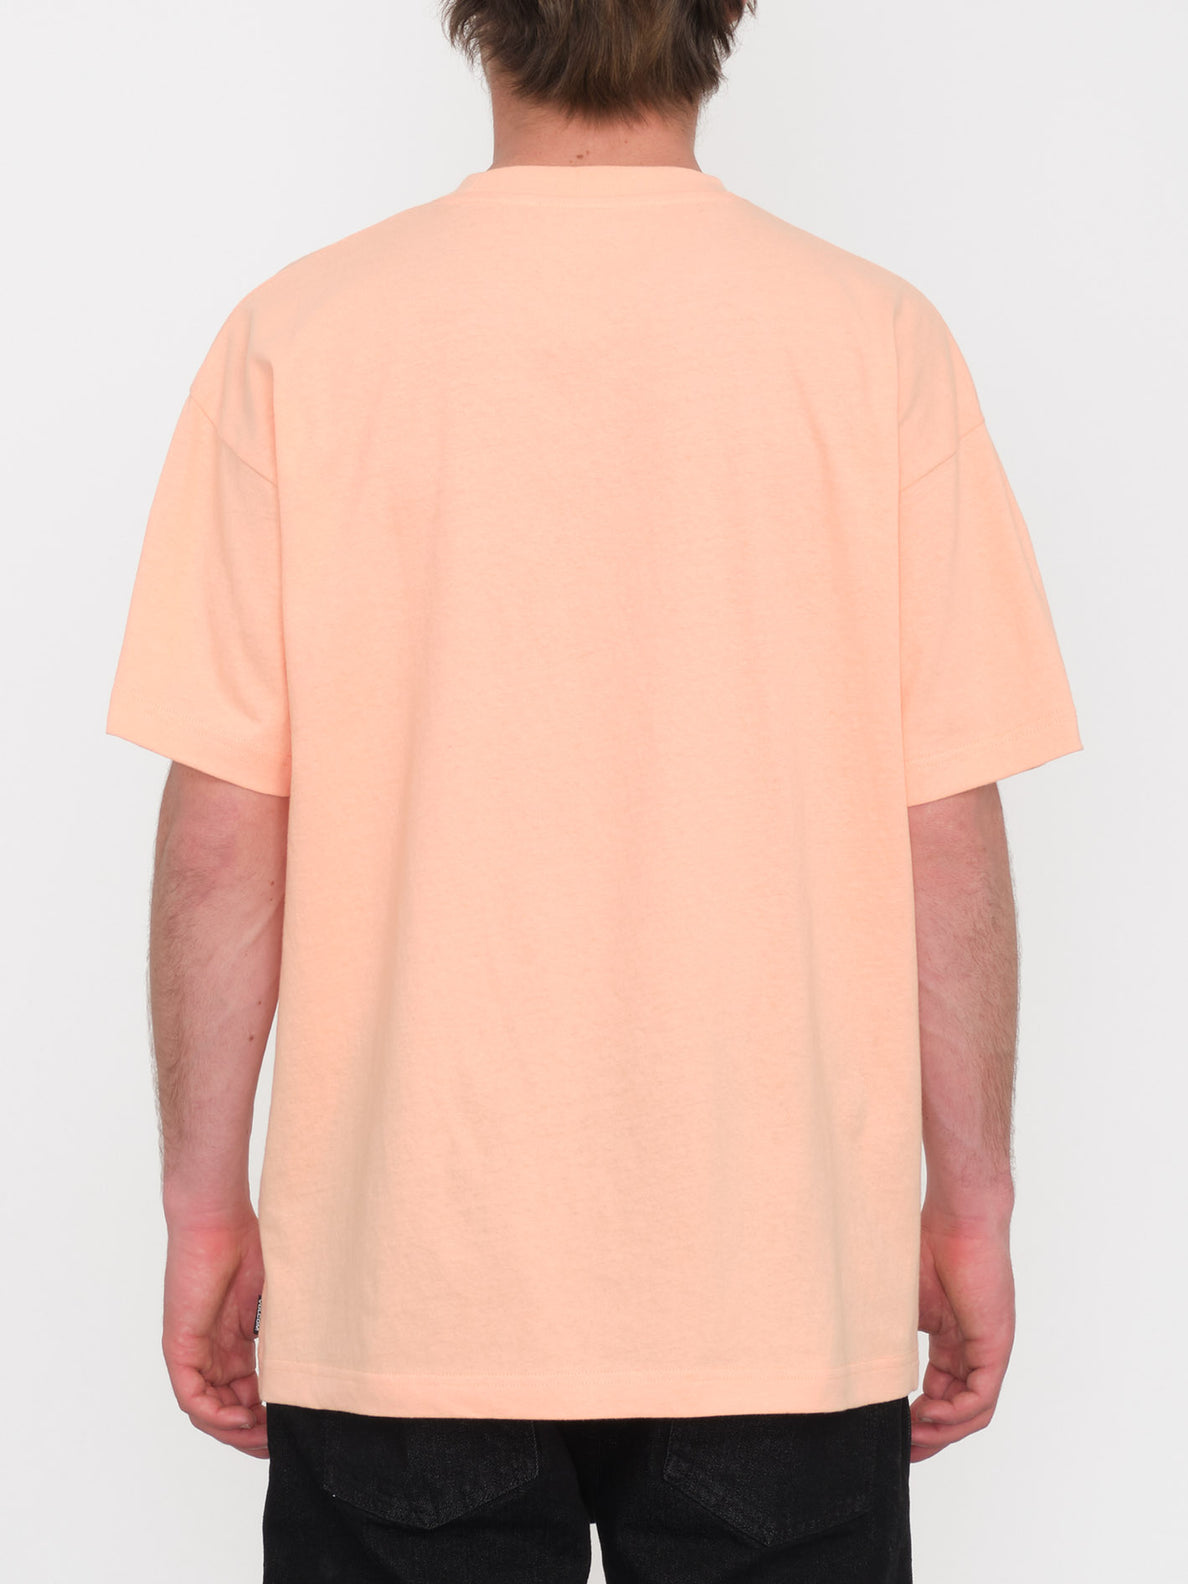 Arthur Longo 3 T-Shirt - SALMON